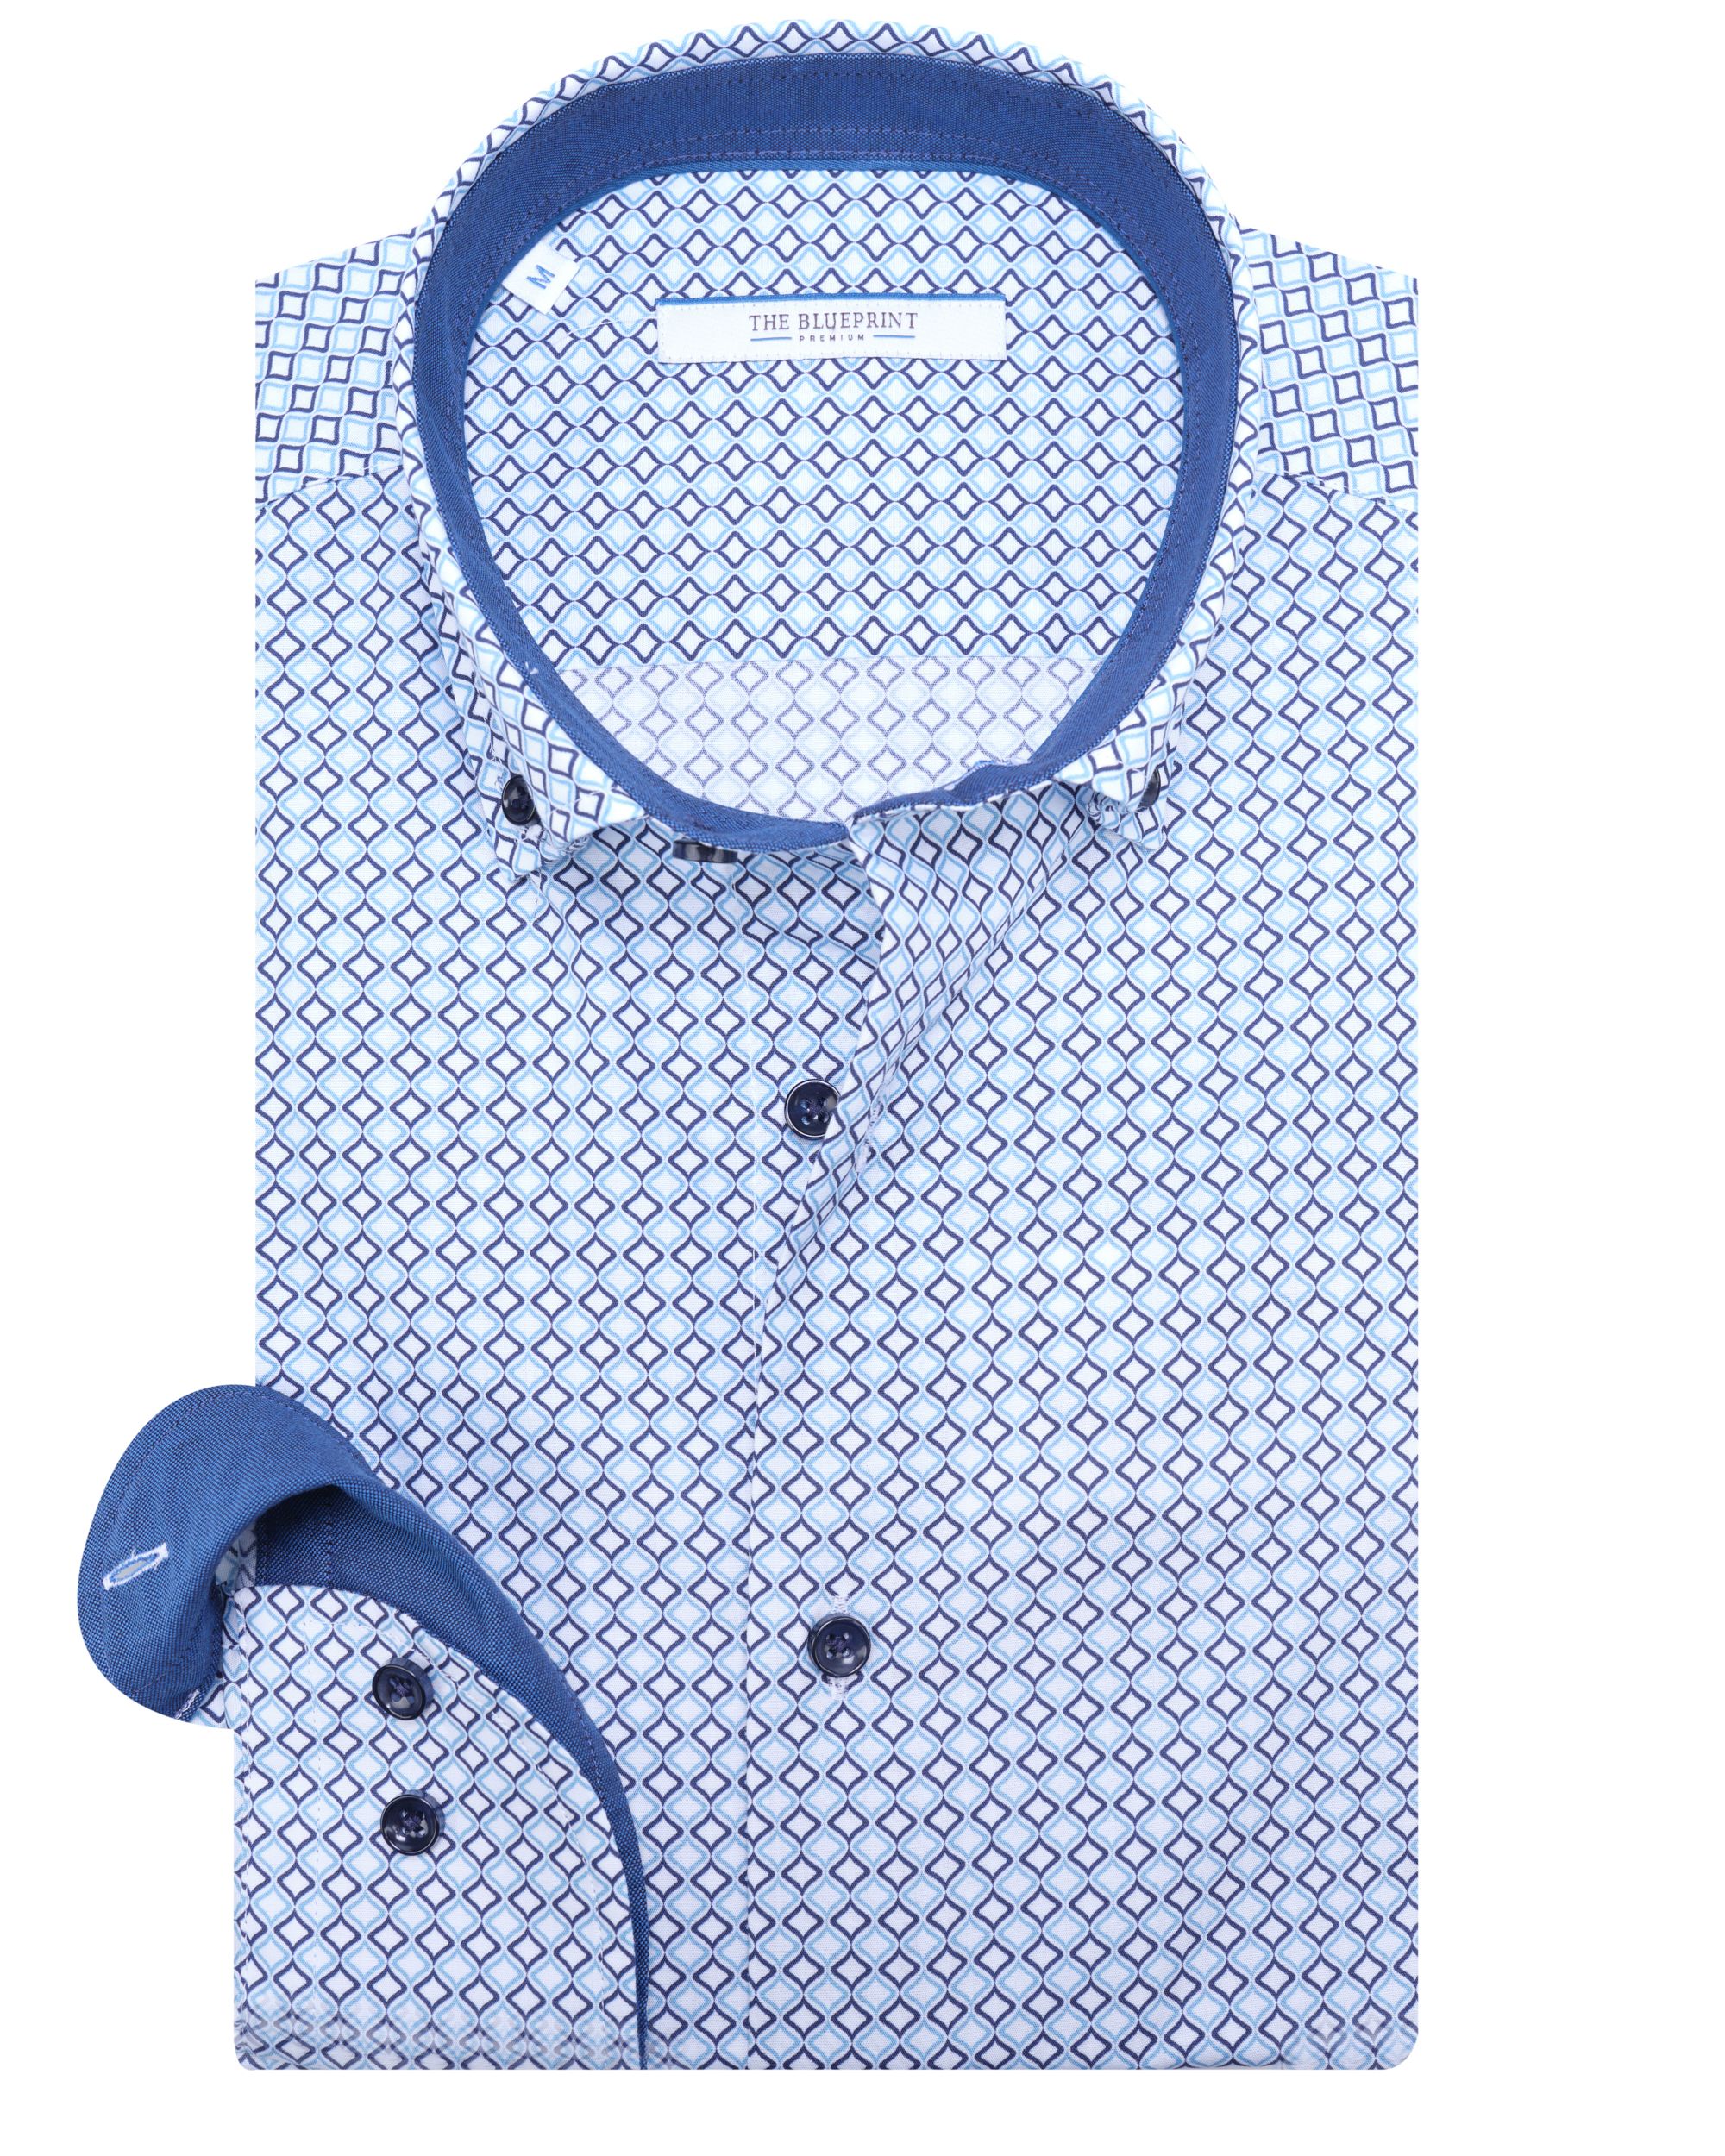 The BLUEPRINT Premium Casual Overhemd LM Blauw dessin 082239-001-L